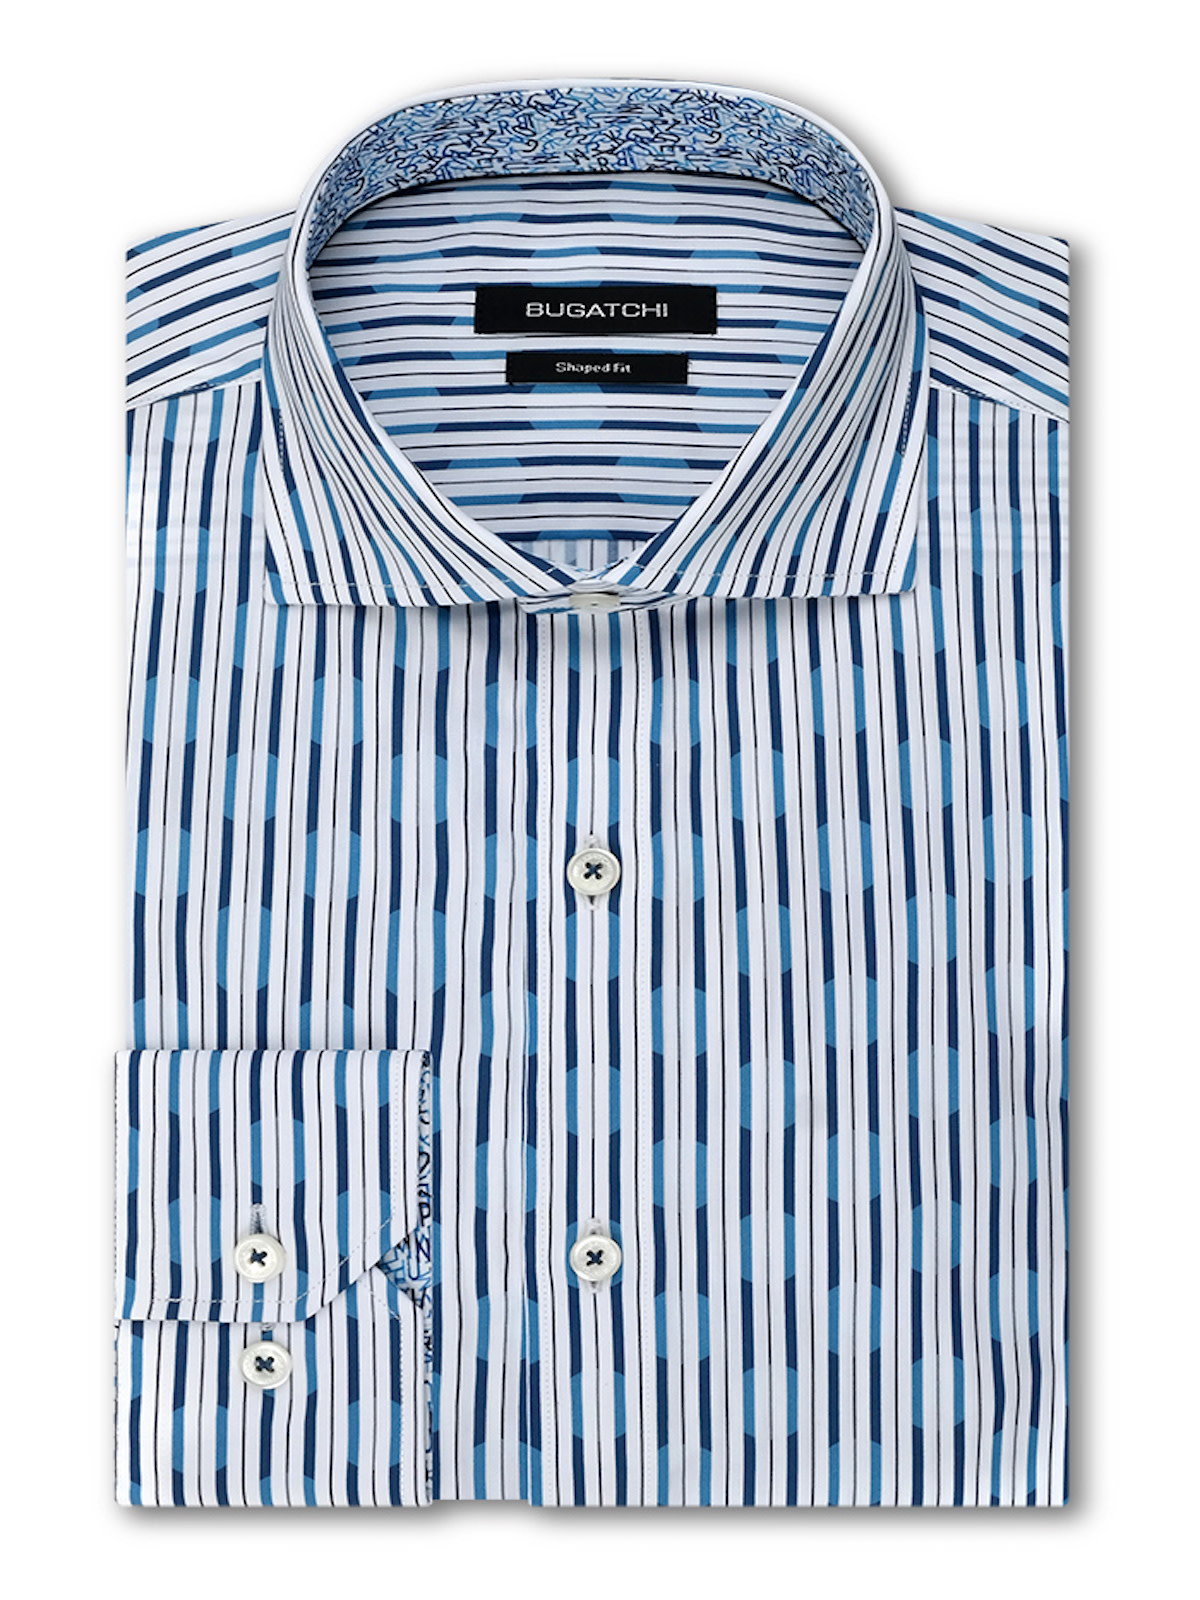 Bugatchi Uomo Striped Shirt | Napoli's ...